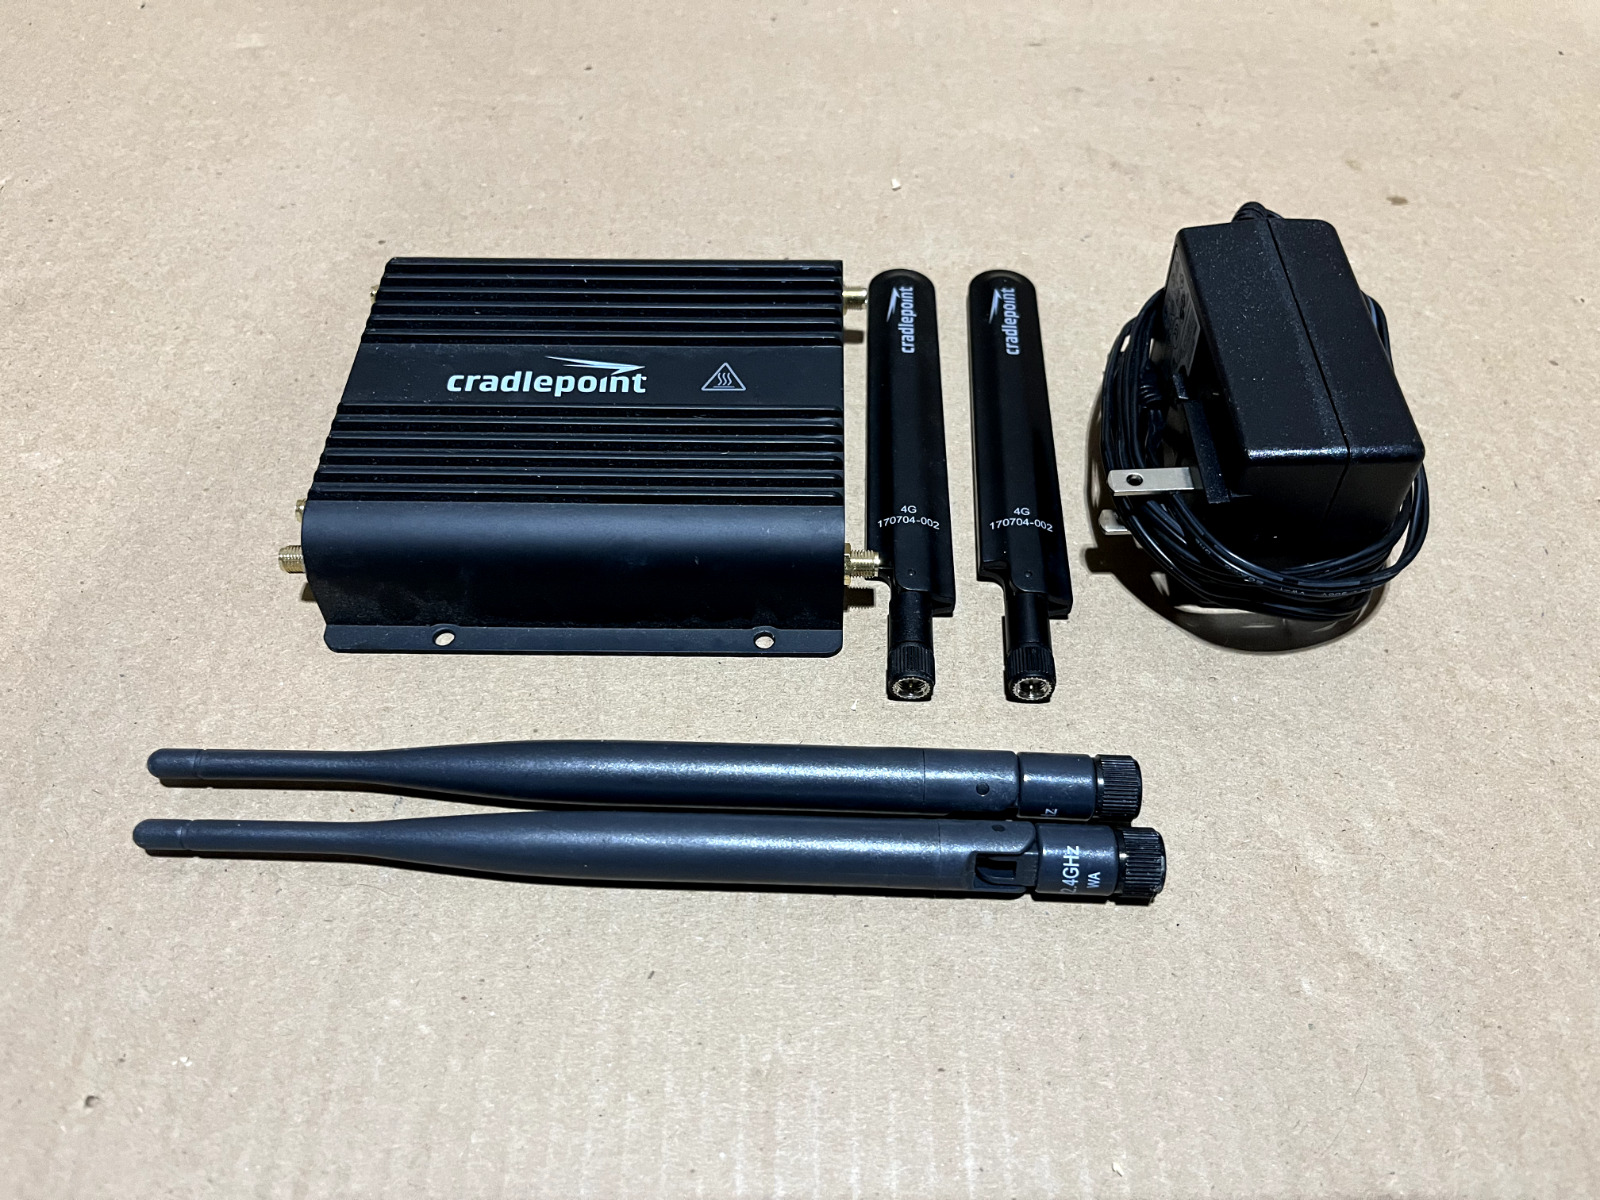 Full Cradlepoint IBR900-600M Router Kit w/ Antennas & PSU (Unlocked)